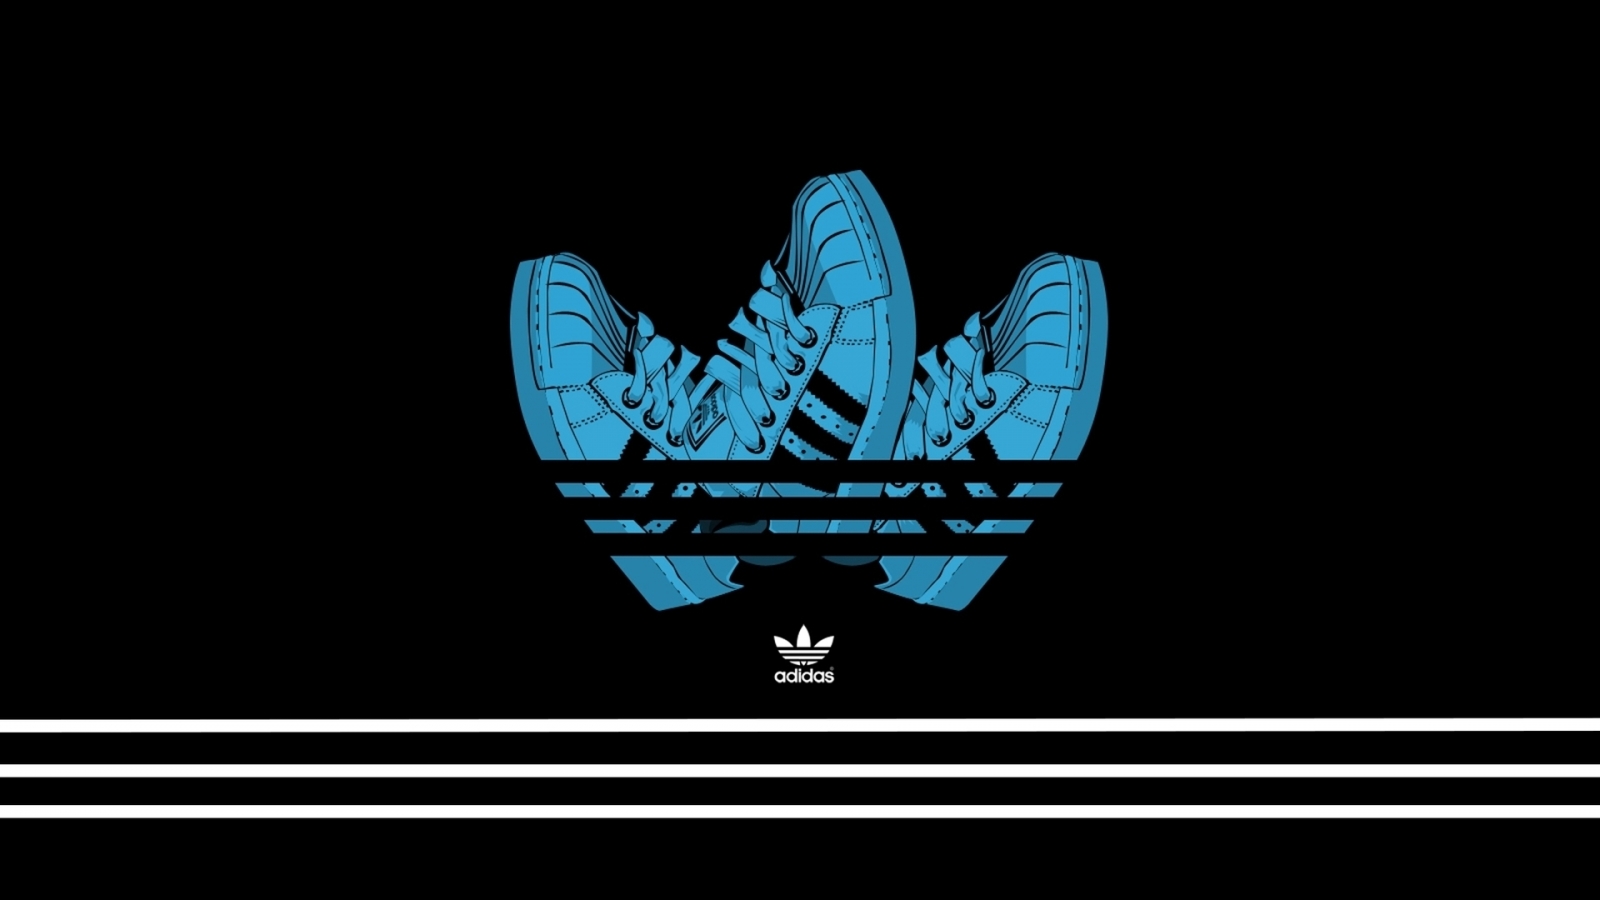 Adidas Creative Logo Design for 1600 x 900 HDTV resolution